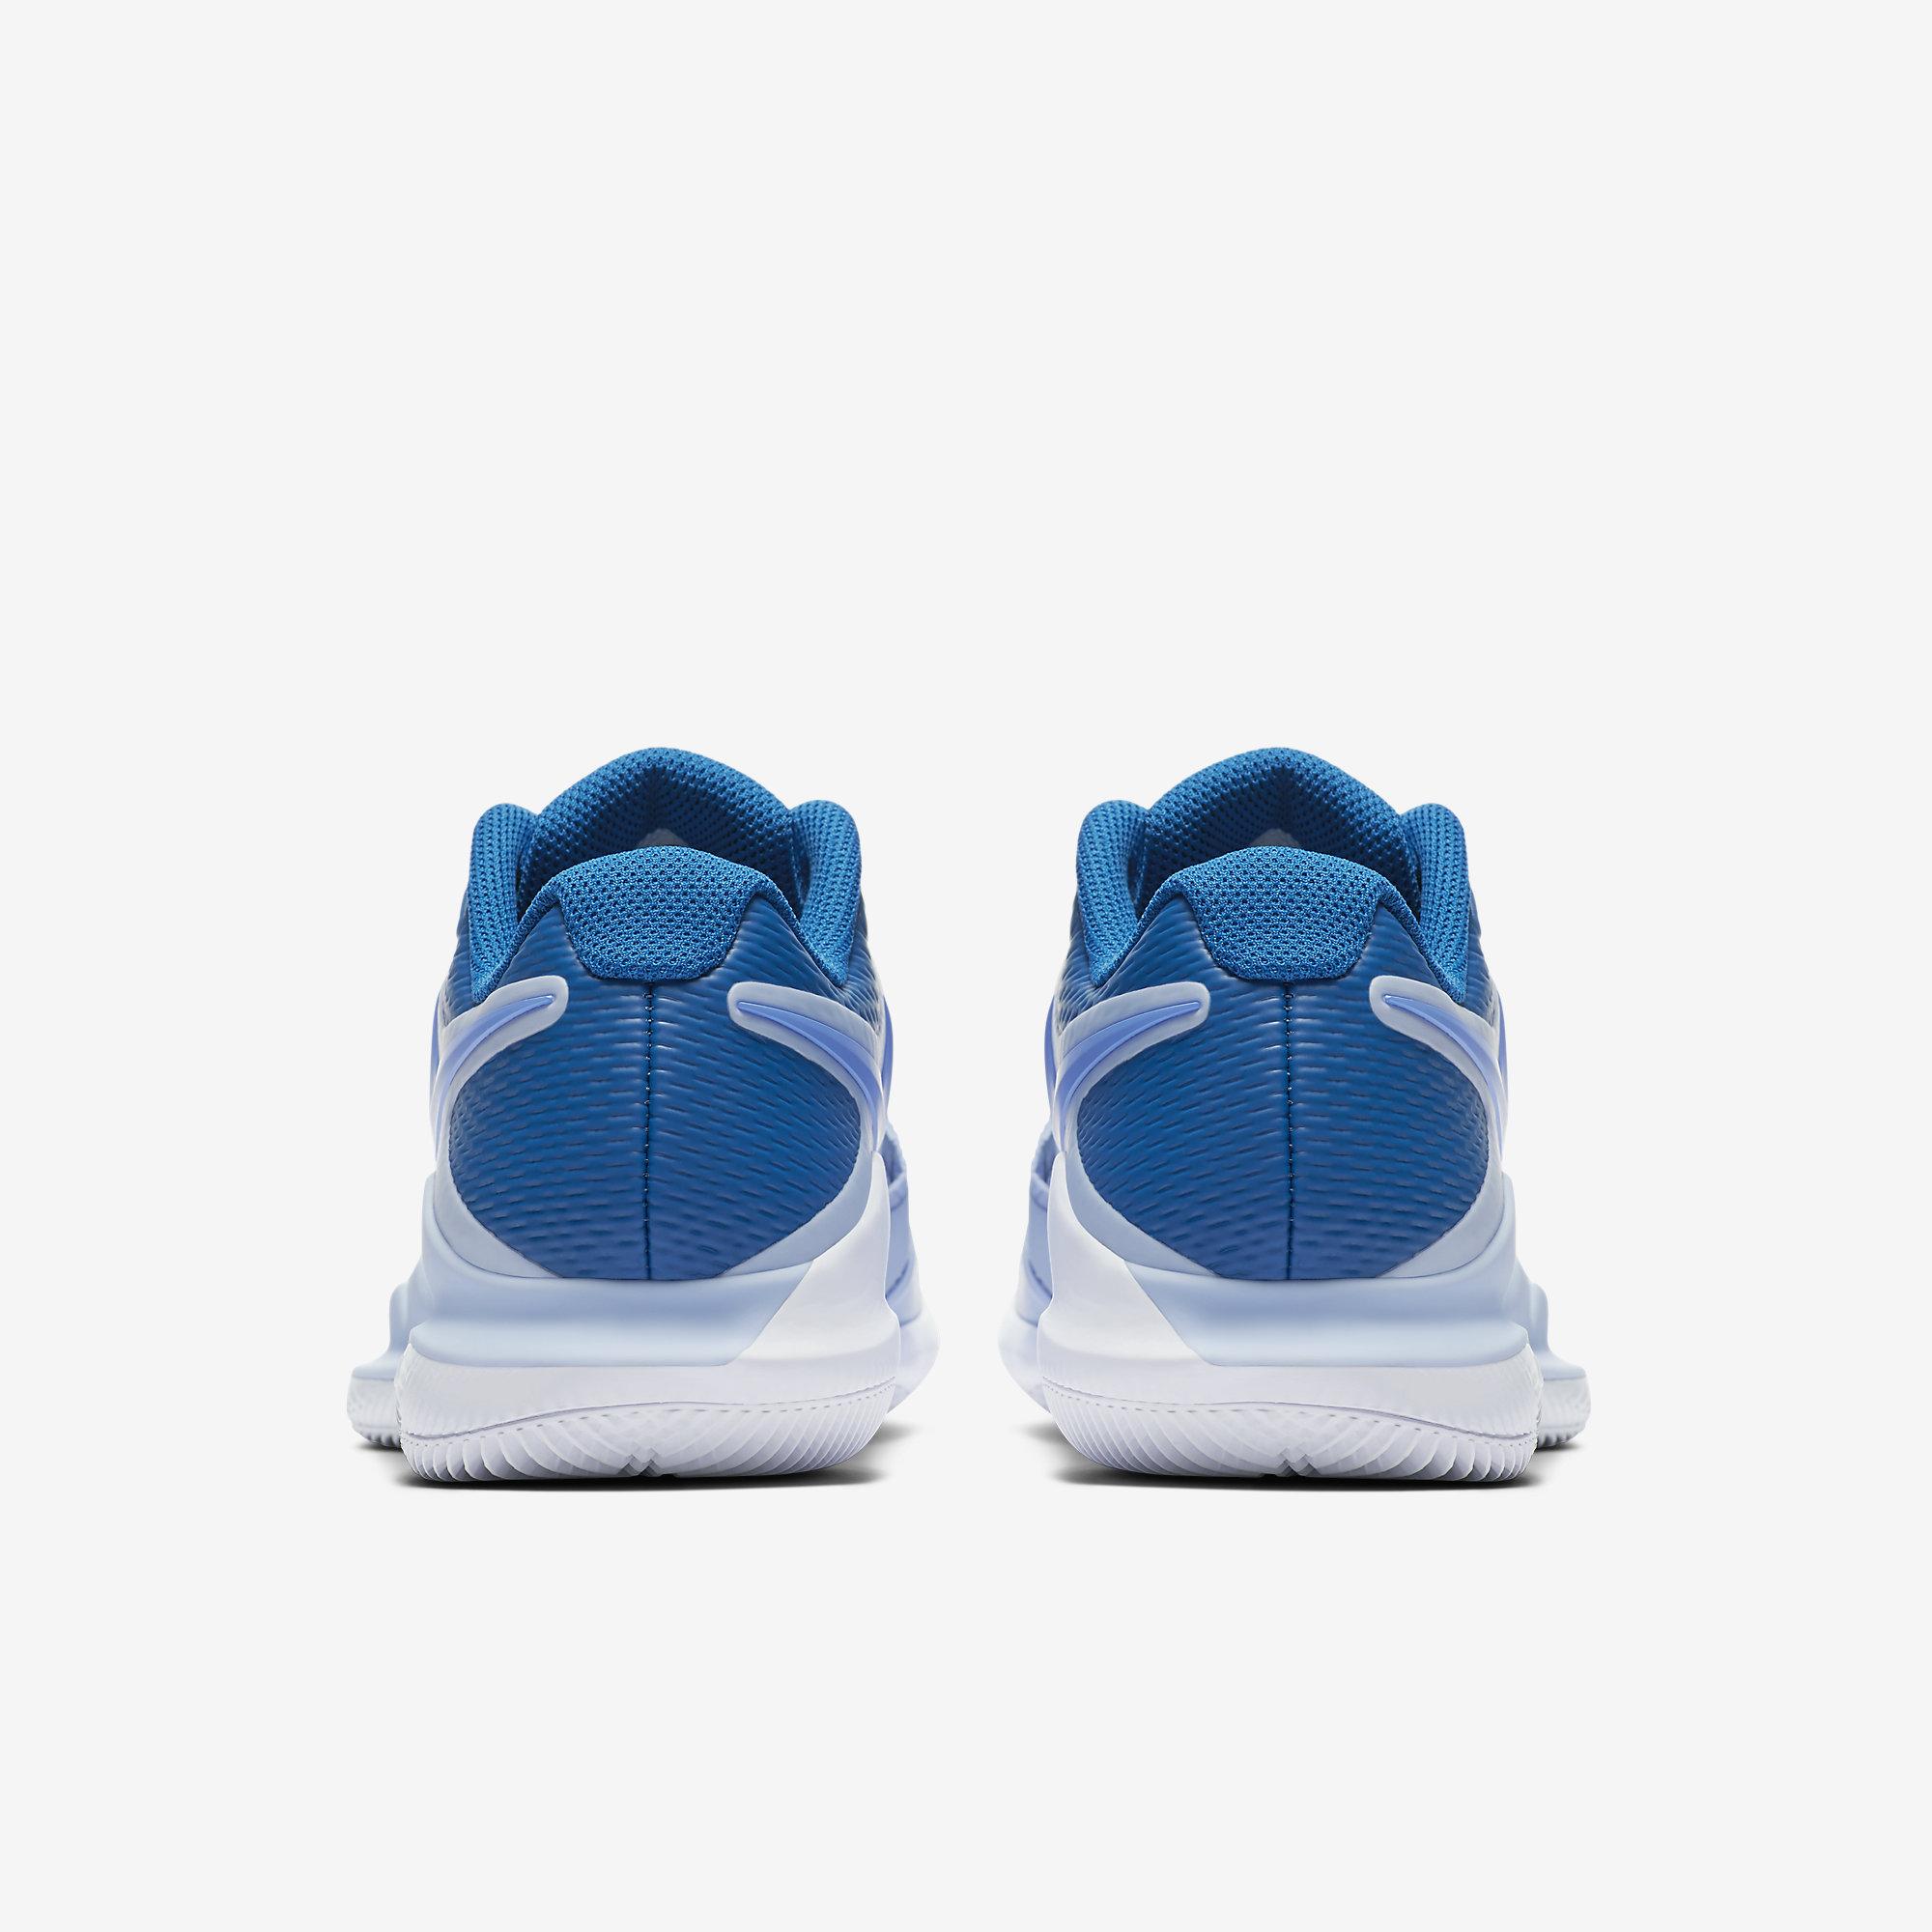 Nike Womens Air Zoom Vapor X Tennis Shoes - Royal Tint/Military Blue ...